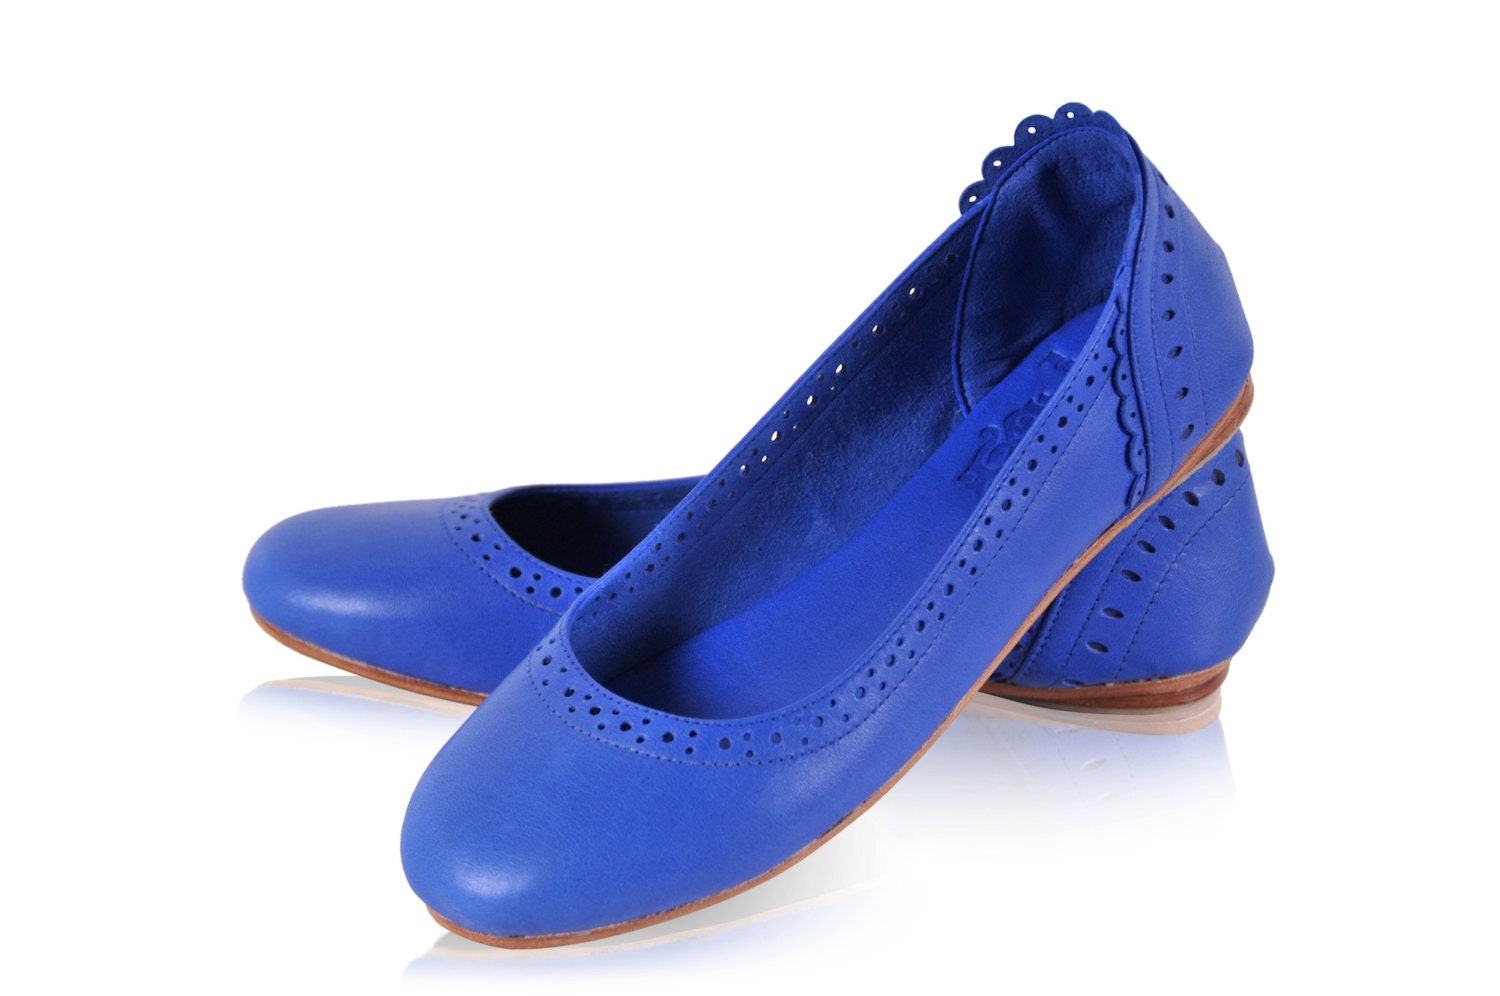 ULUWATU. Blue shoes / leather flats / blue leather shoes